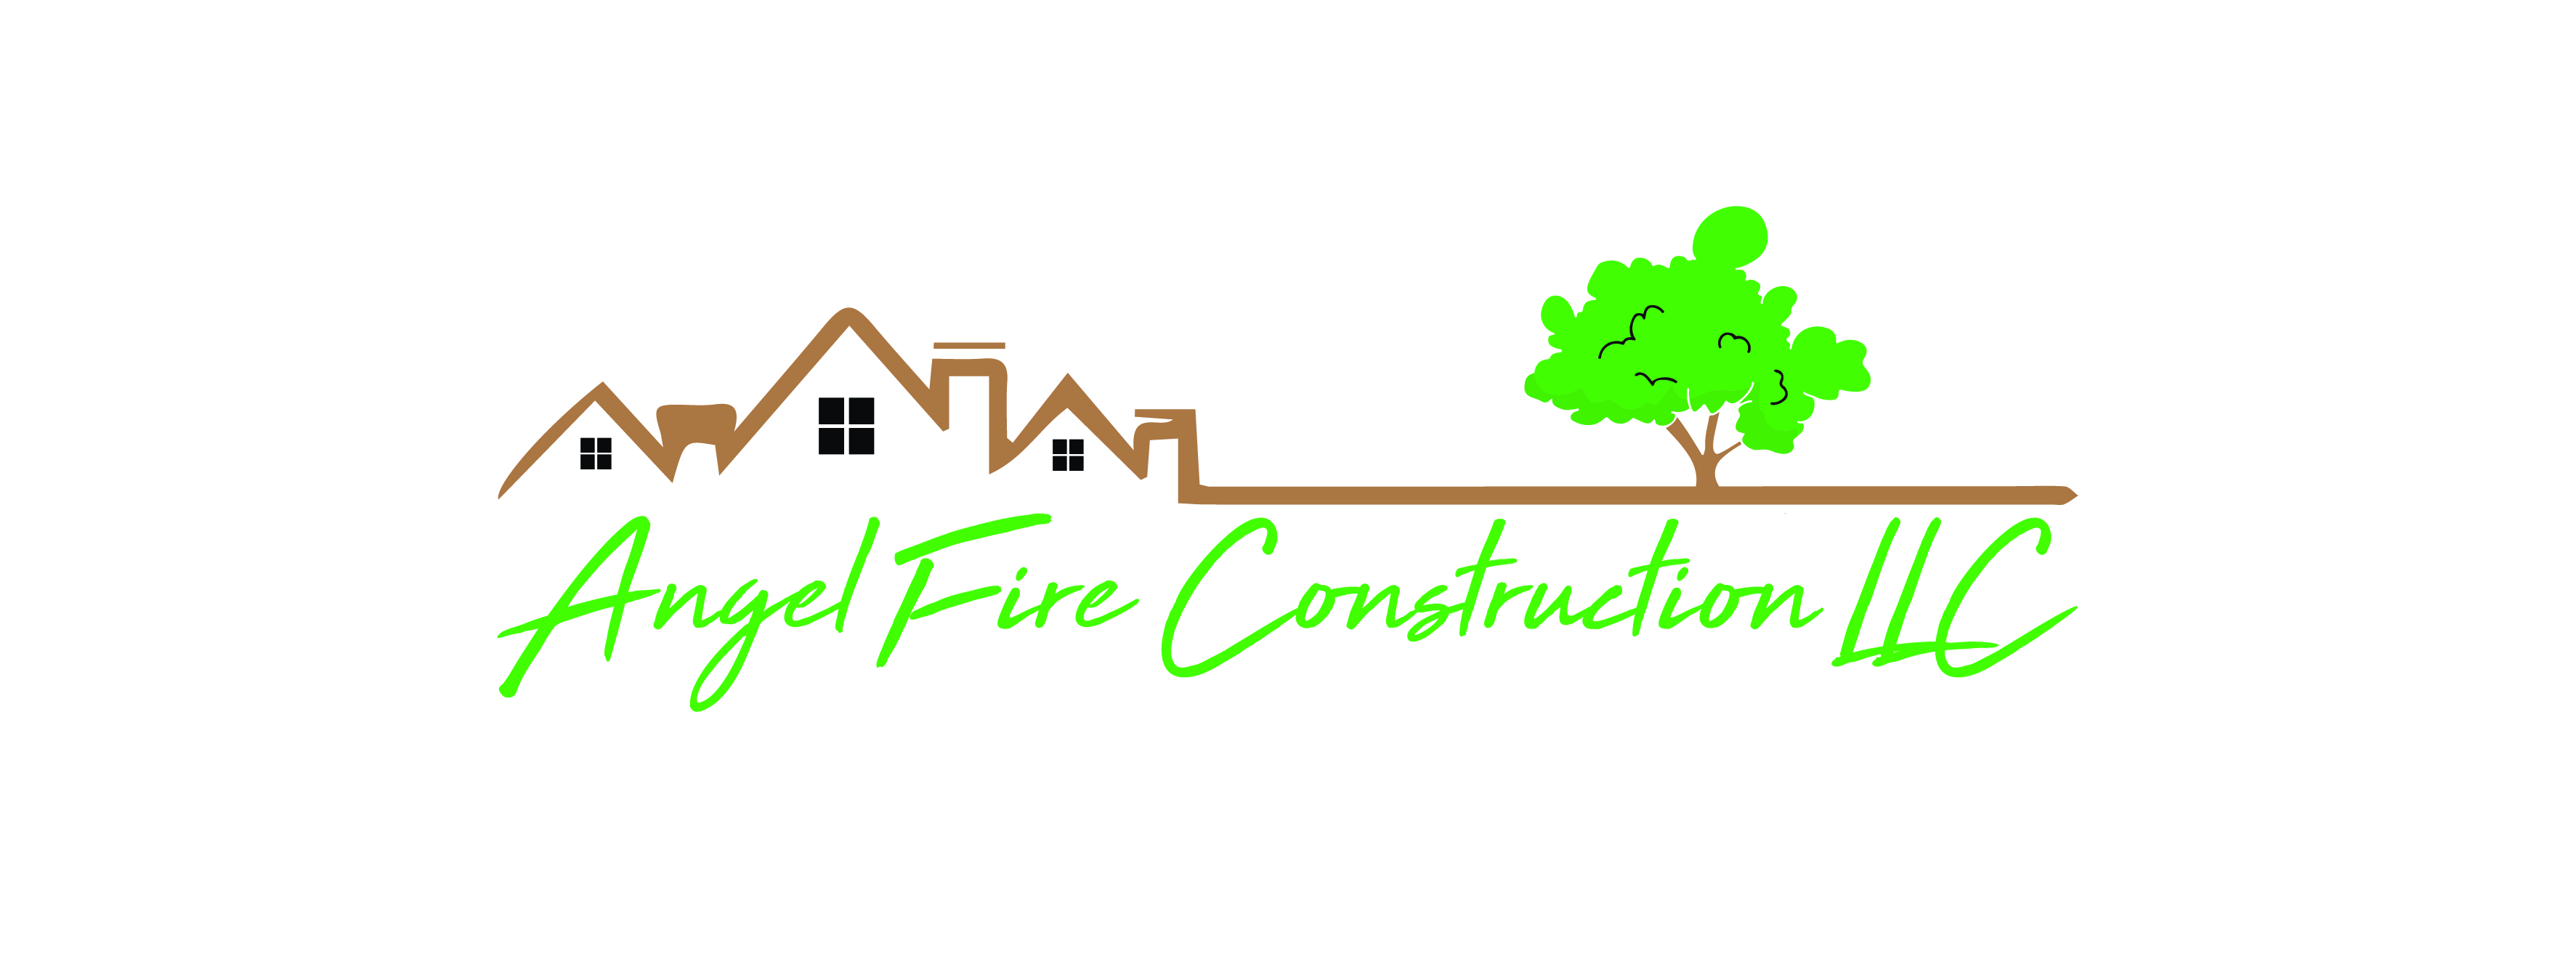 Angel Fire Construction LLC company logo